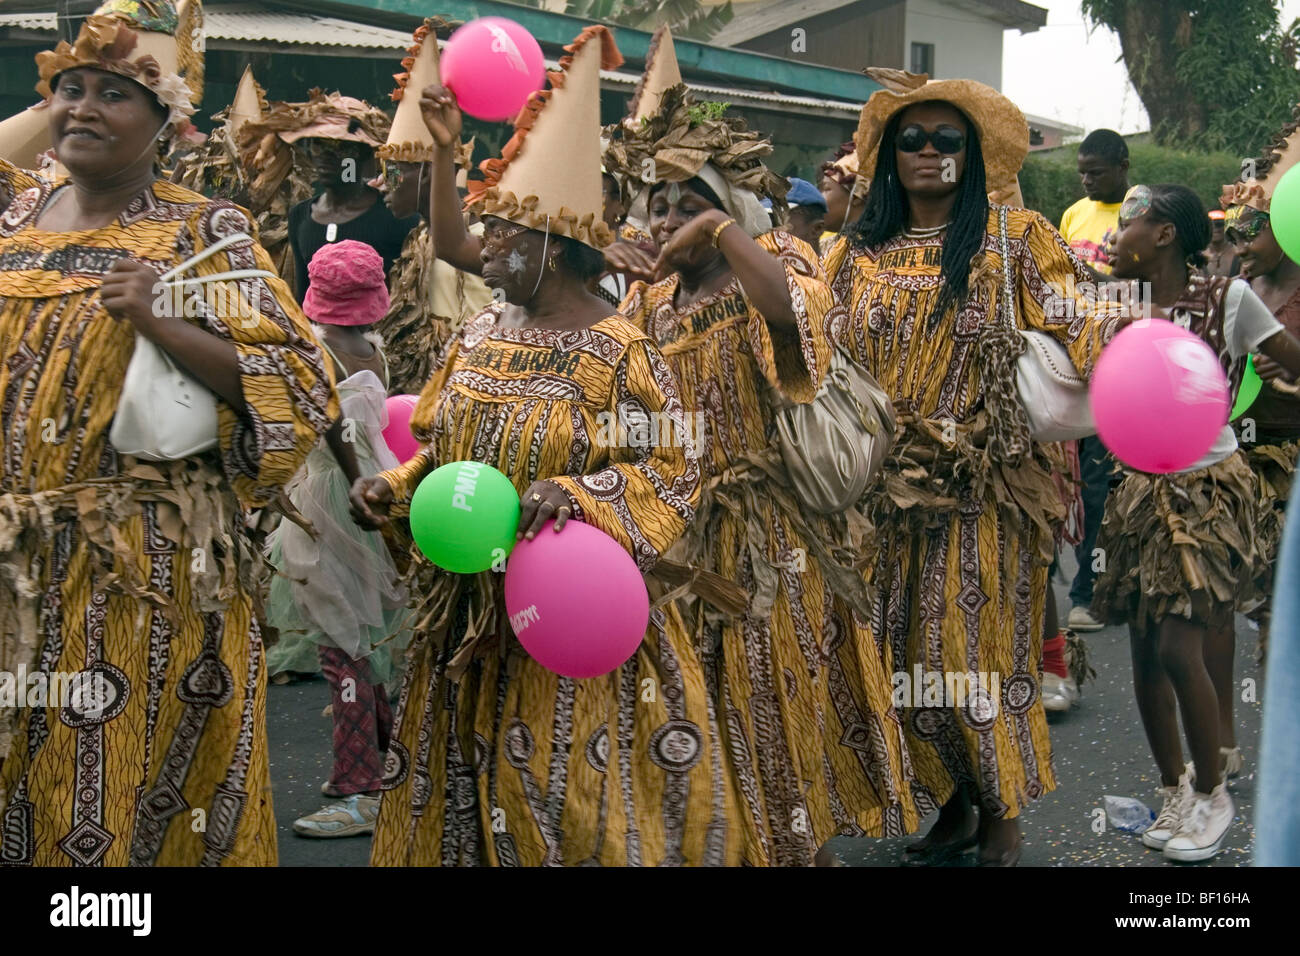 Frauengruppe identisch bedruckten Kaba tragen Kleider Karneval Parade Bonapriso Bezirk Douala Kamerun Westafrika Stockfoto